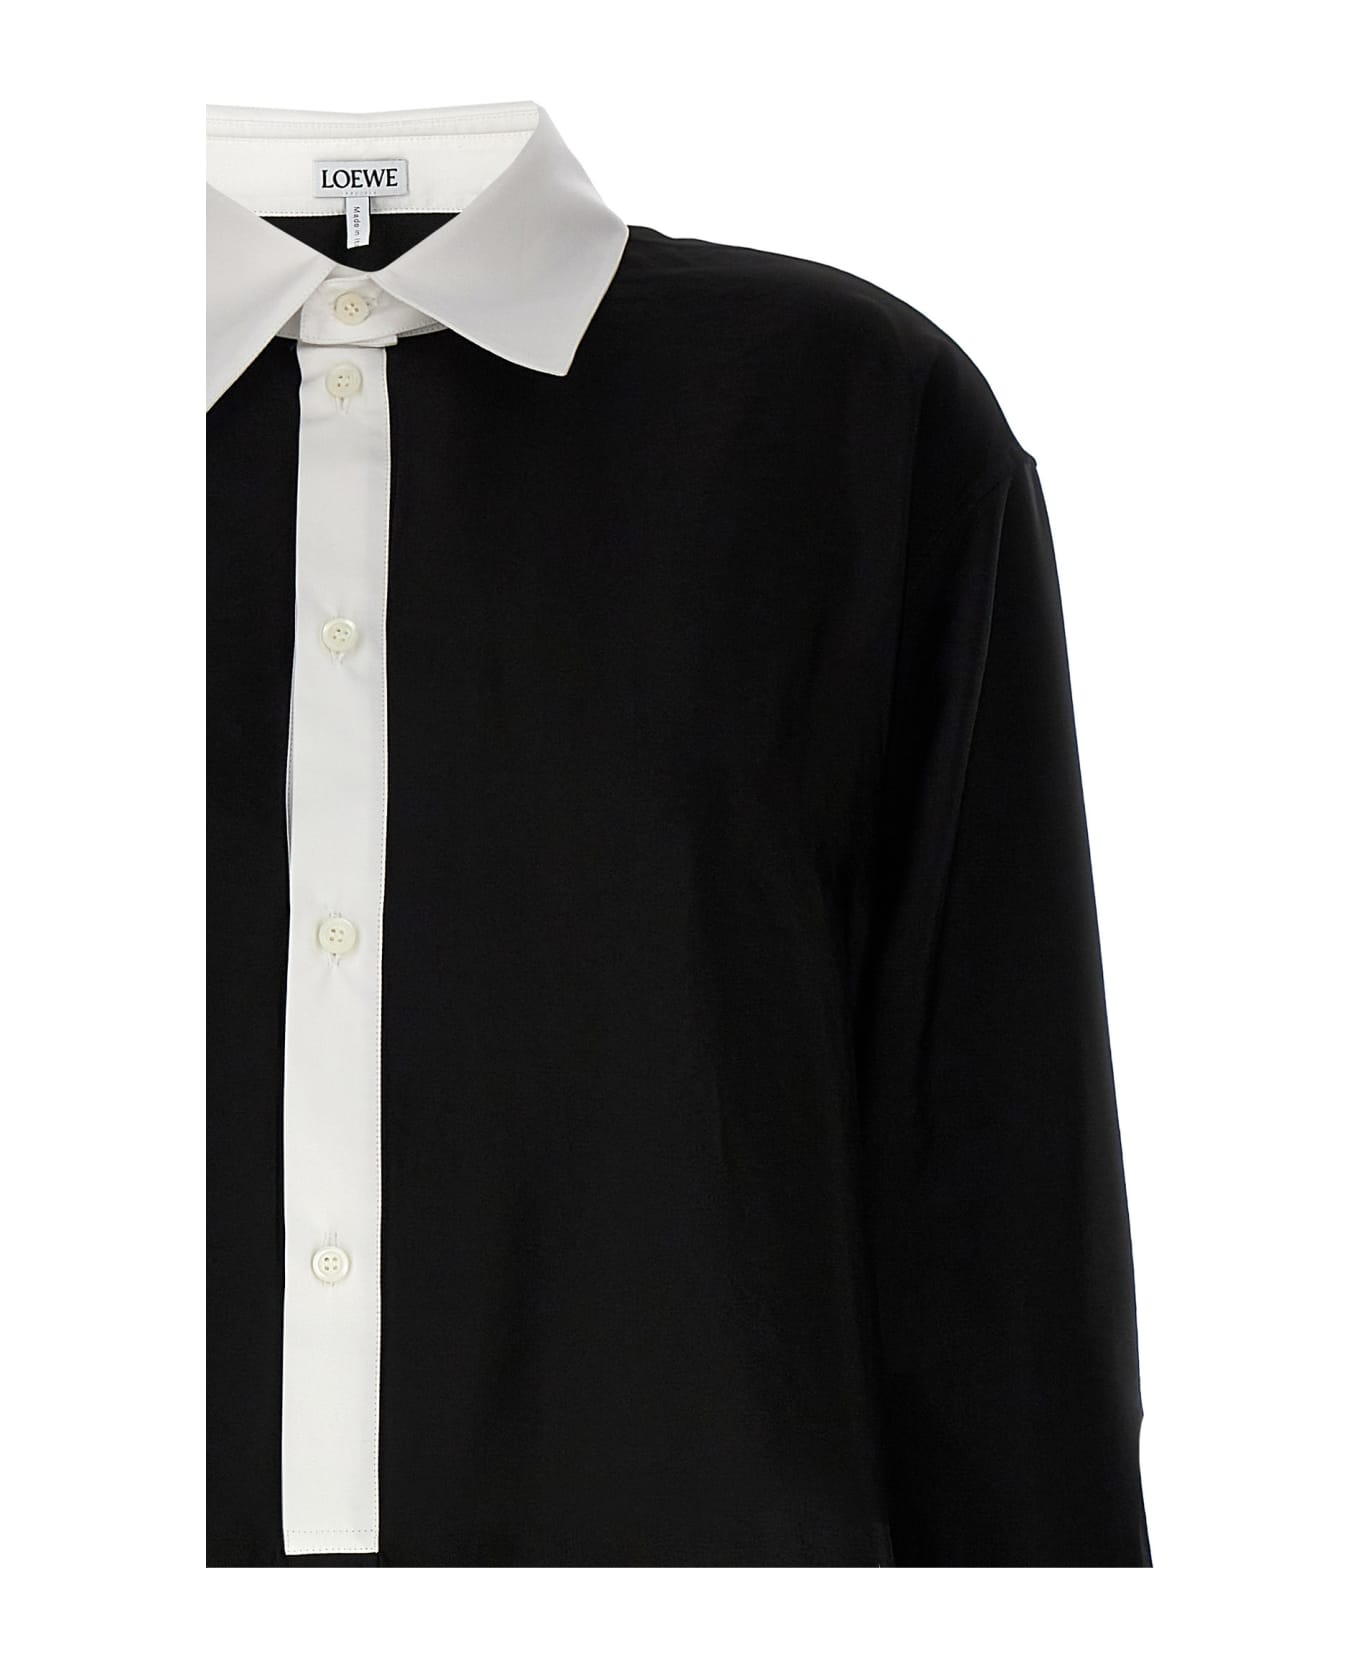 Loewe Shirt Dress - White/Black